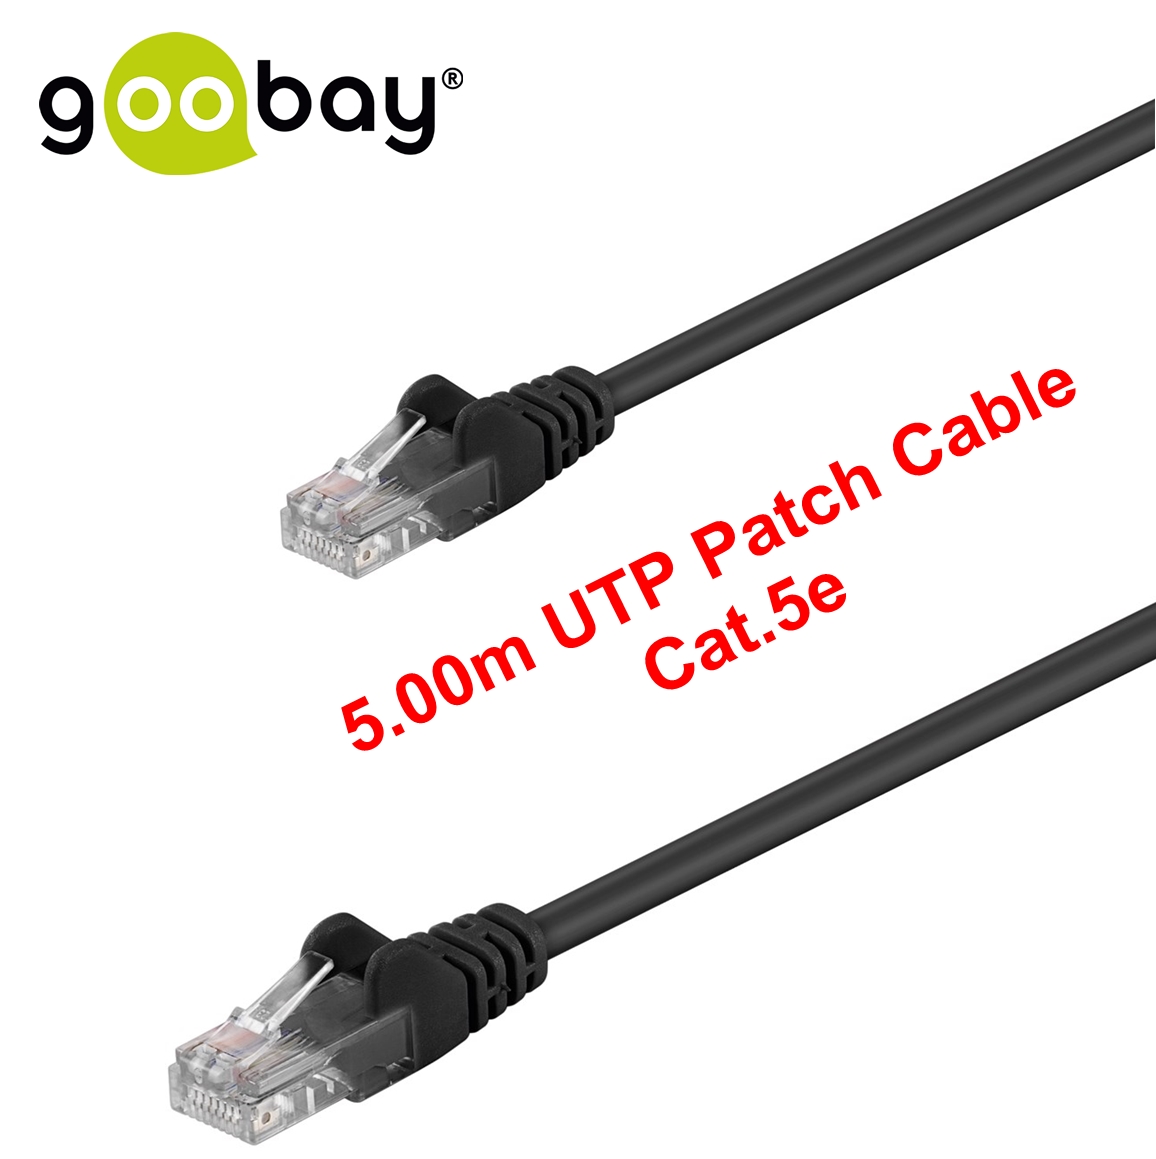 5.00m UTP Patch Cable Cat.5e GOOBAY (black)